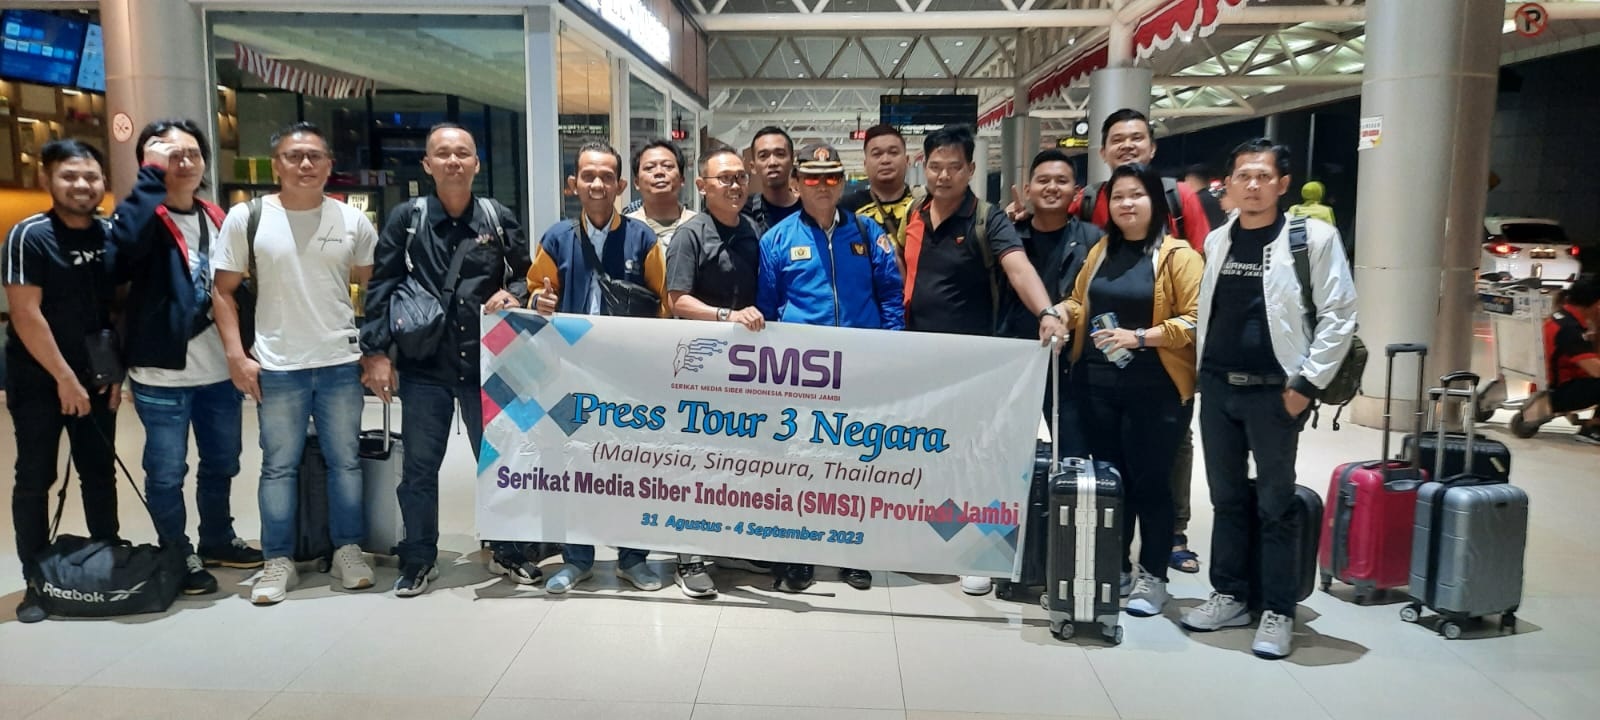 16 Orang Pengurus SMSI Jambi Bertolak Dari Bandara SMB II, Tujuan Pertama Jelajahi Malaysia